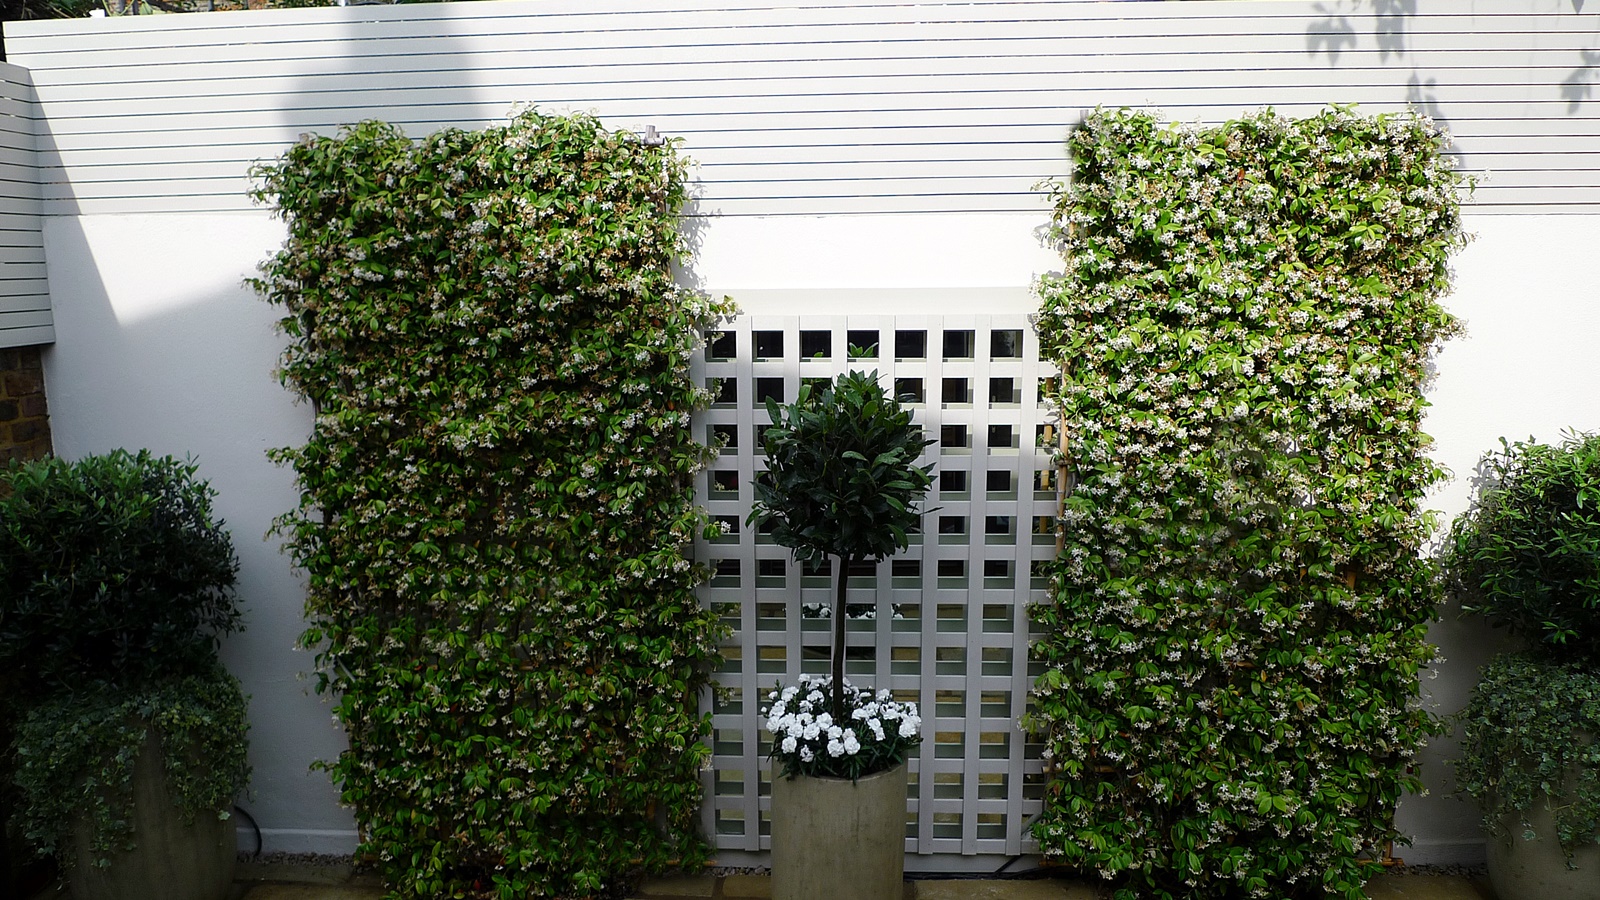 Courtyard minimalist contemporary garden design and designer chelsea fulham london